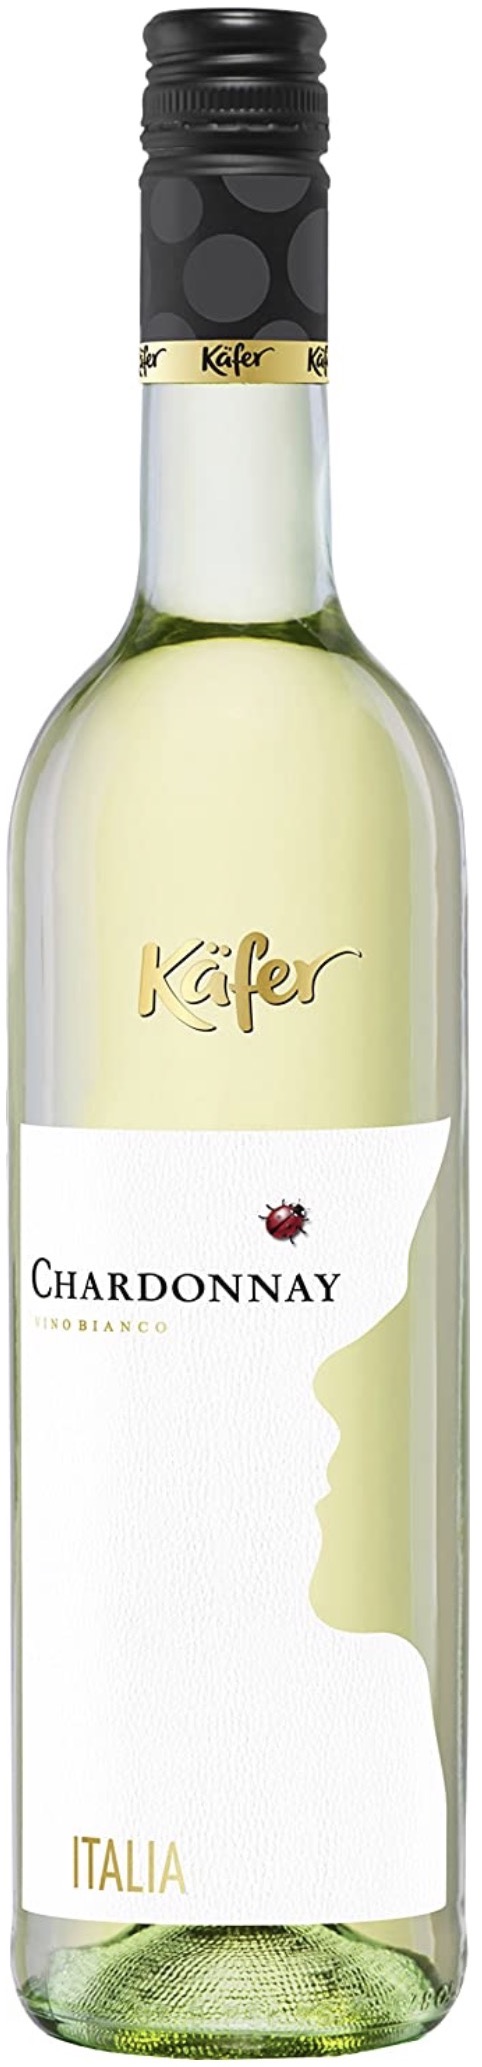 Käfer Chardonnay Italien trocken 0,75L